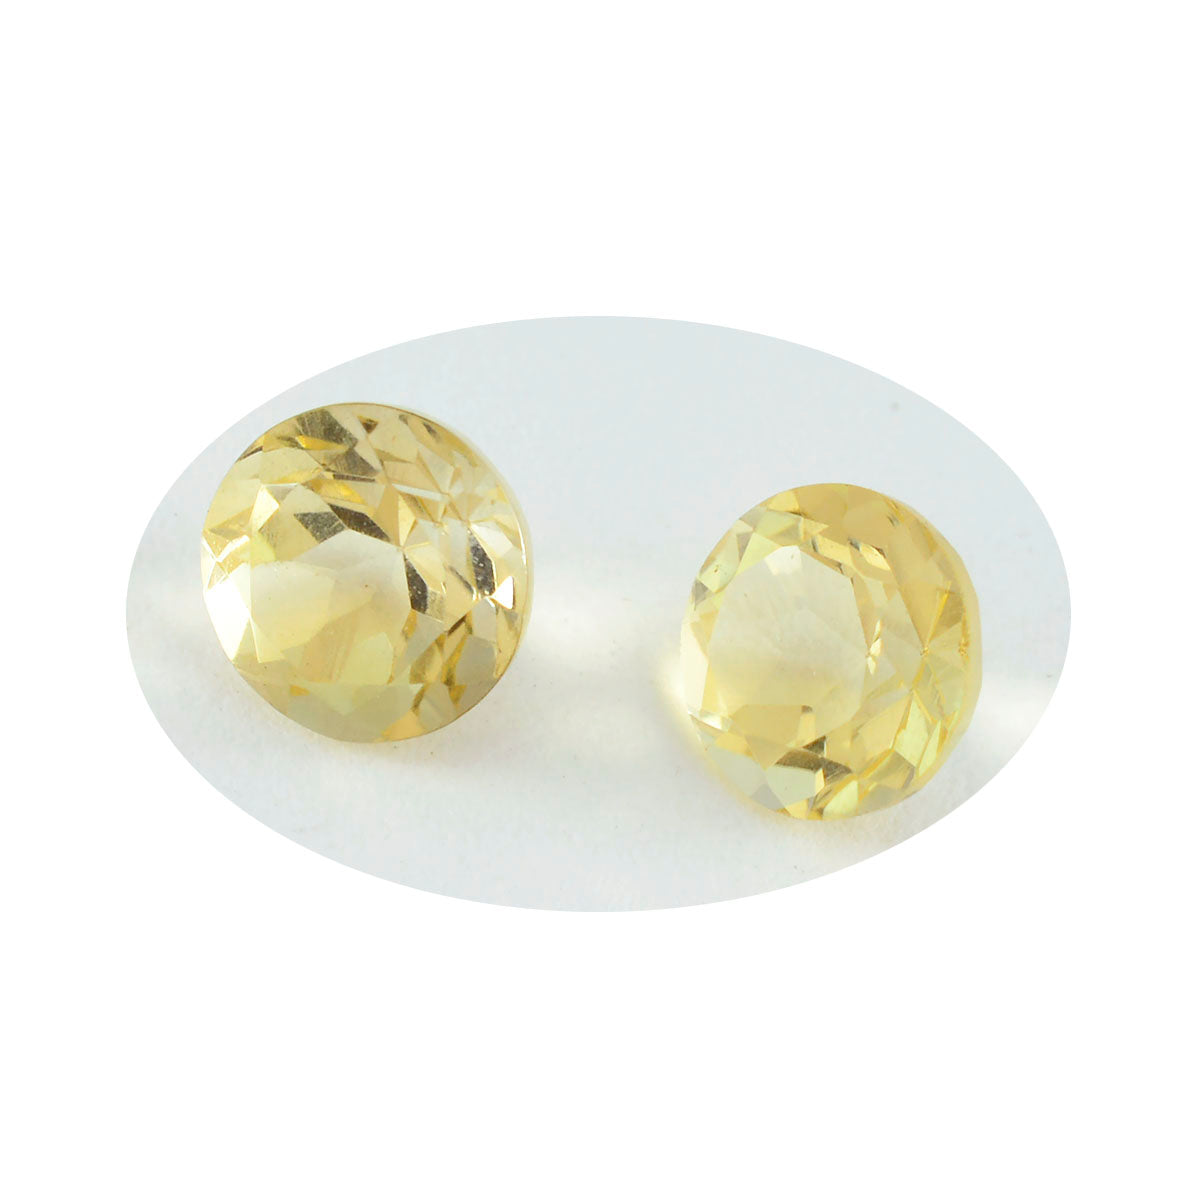 Riyogems 1PC Genuine Yellow Citrine Faceted 12x12 mm Round Shape A1 Quality Loose Gemstone